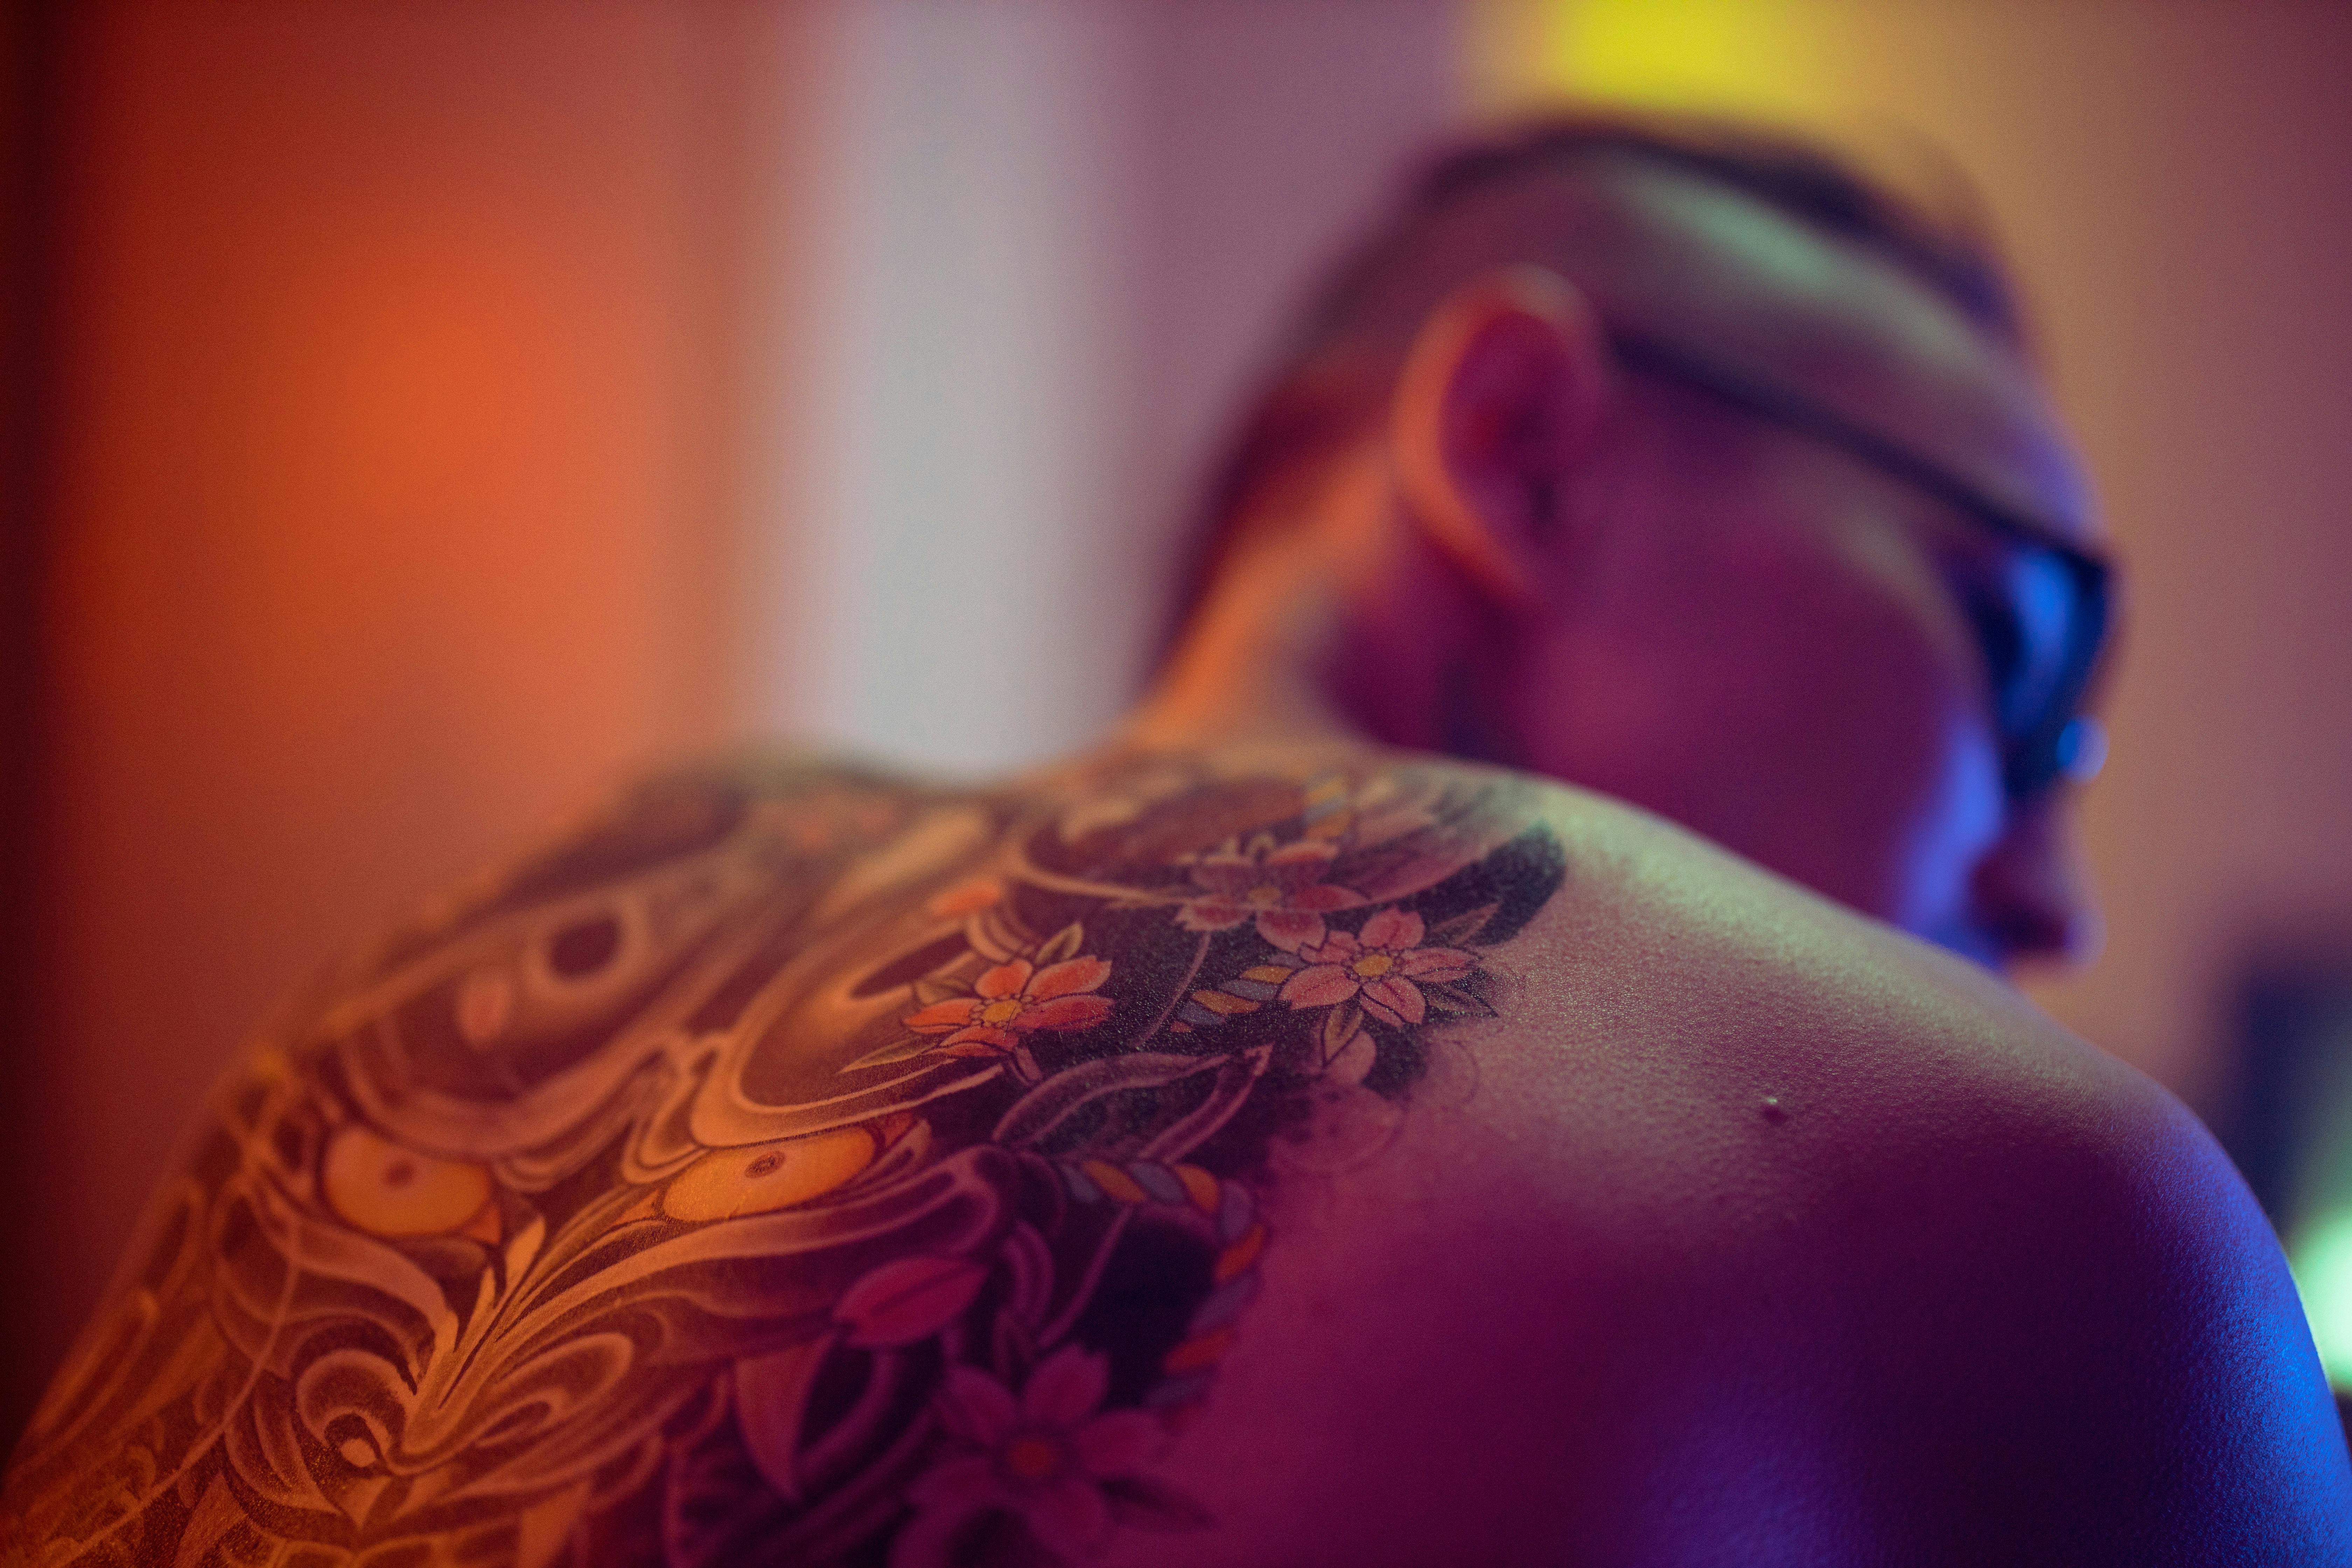 Tattoo Artist Working · Free Stock Photo